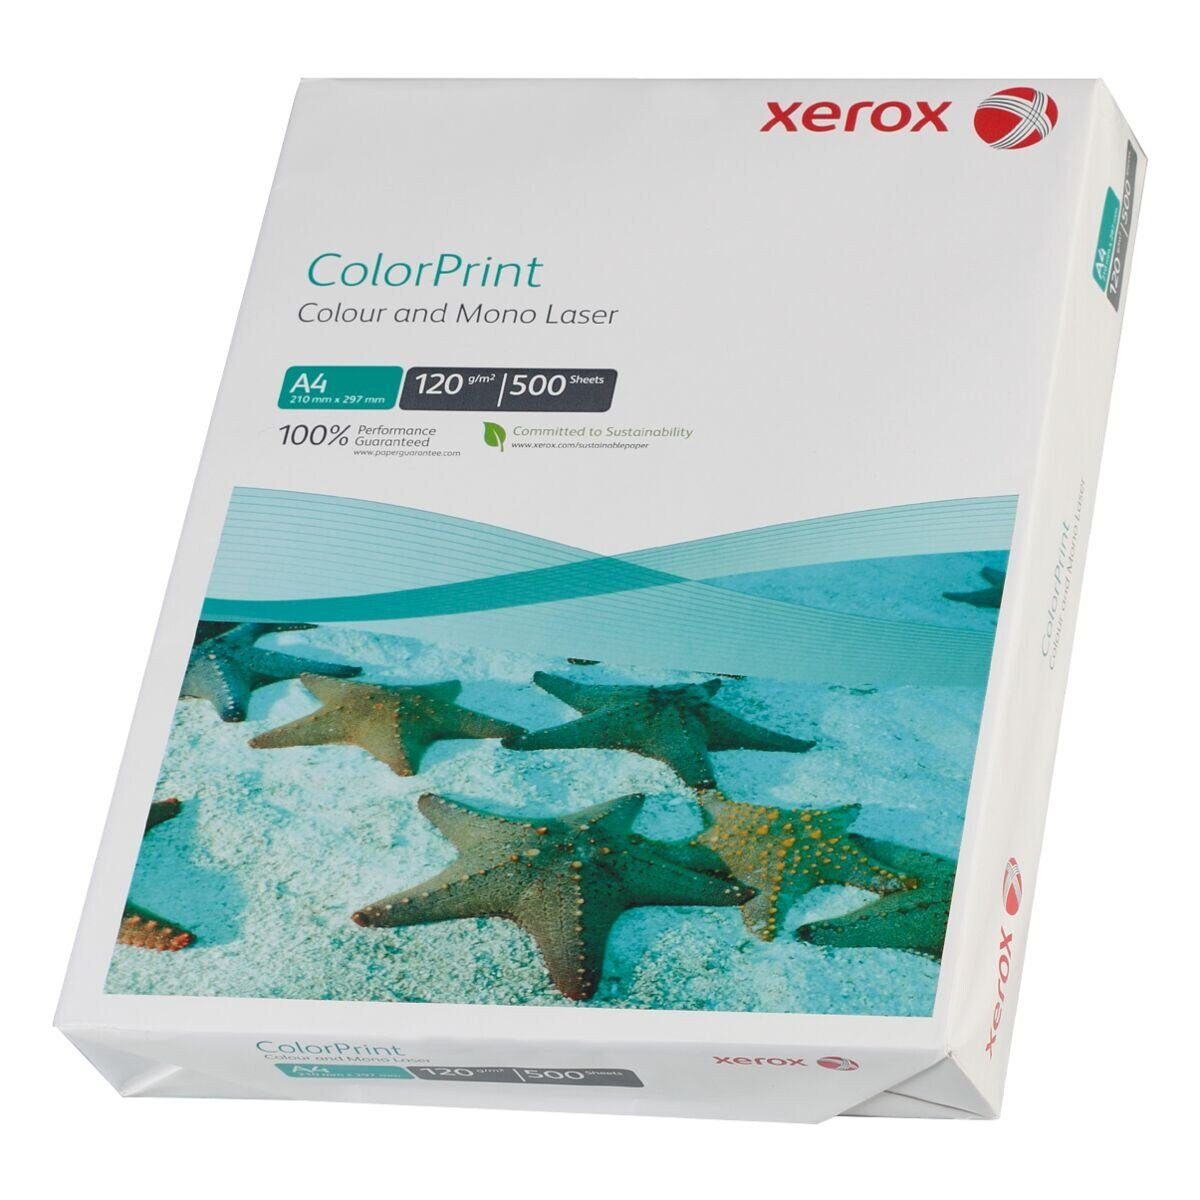 CIE, 120 171 Blatt A4, ColorPrint, Farblaser-Druckerpapier Format 500 g/m², DIN Xerox